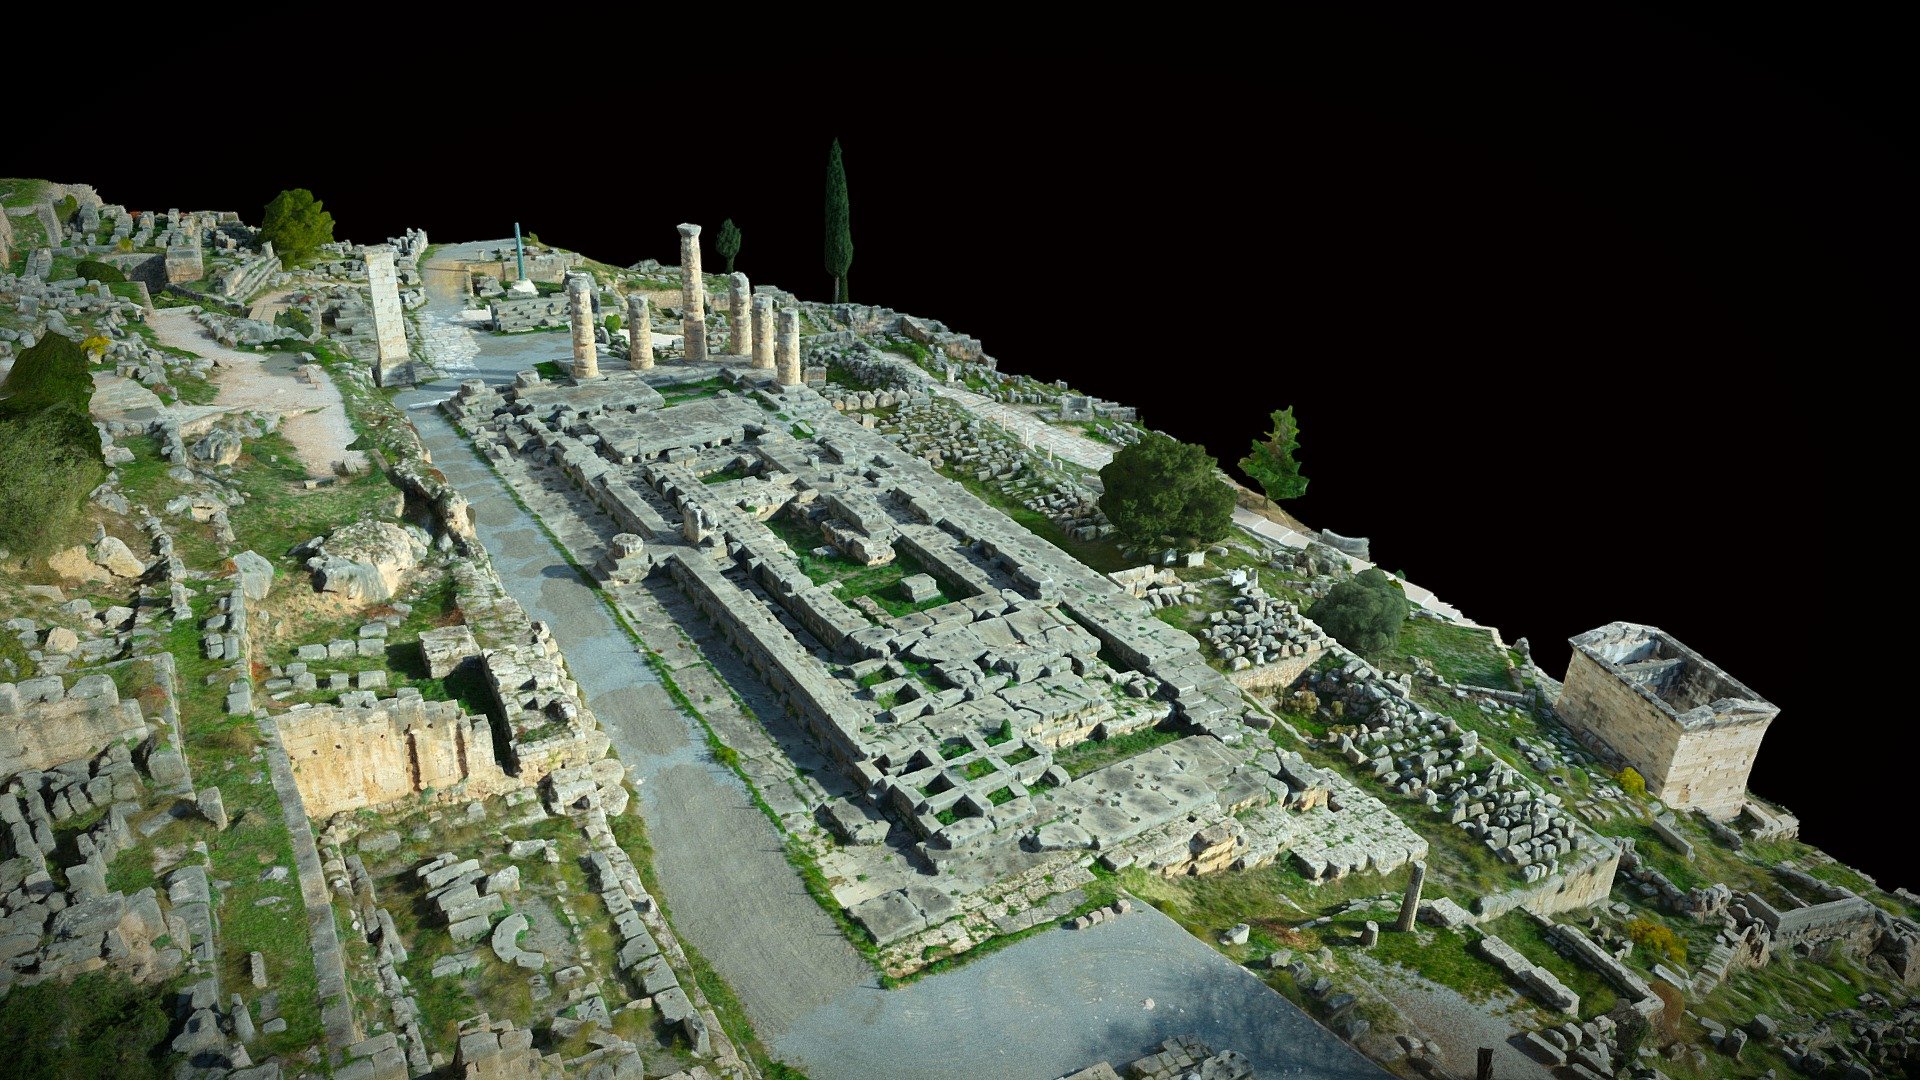 3D model of the Temple of Apollo